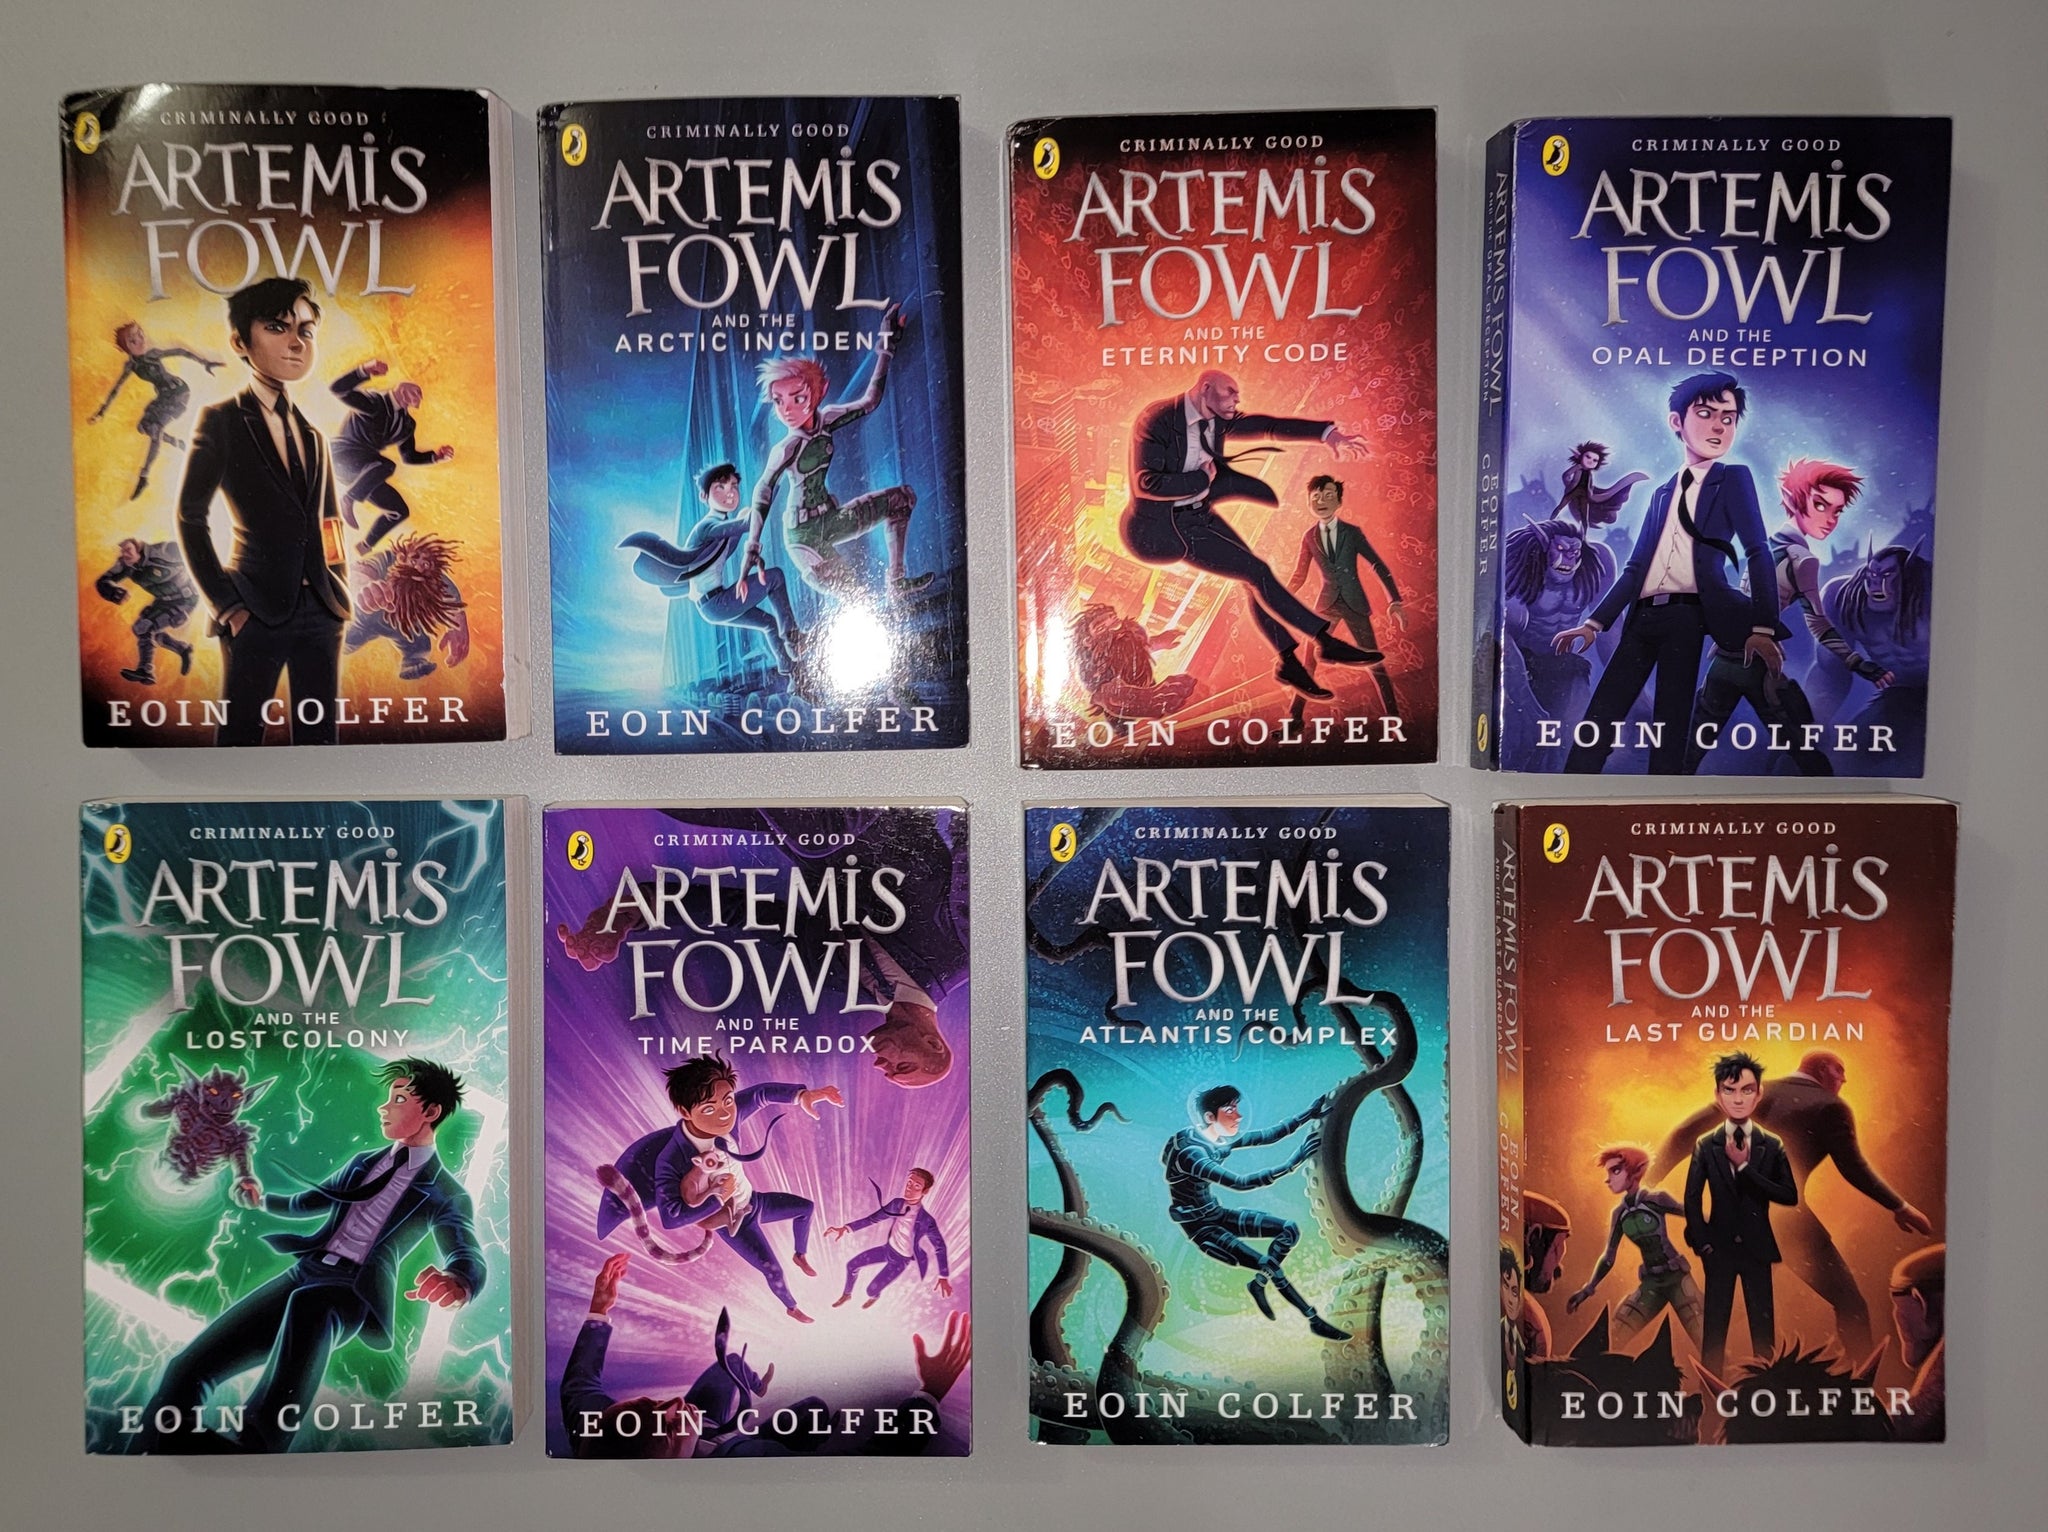 Artemis Fowl: Last Guardian, The-Artemis Fowl, Book 8 (Paperback